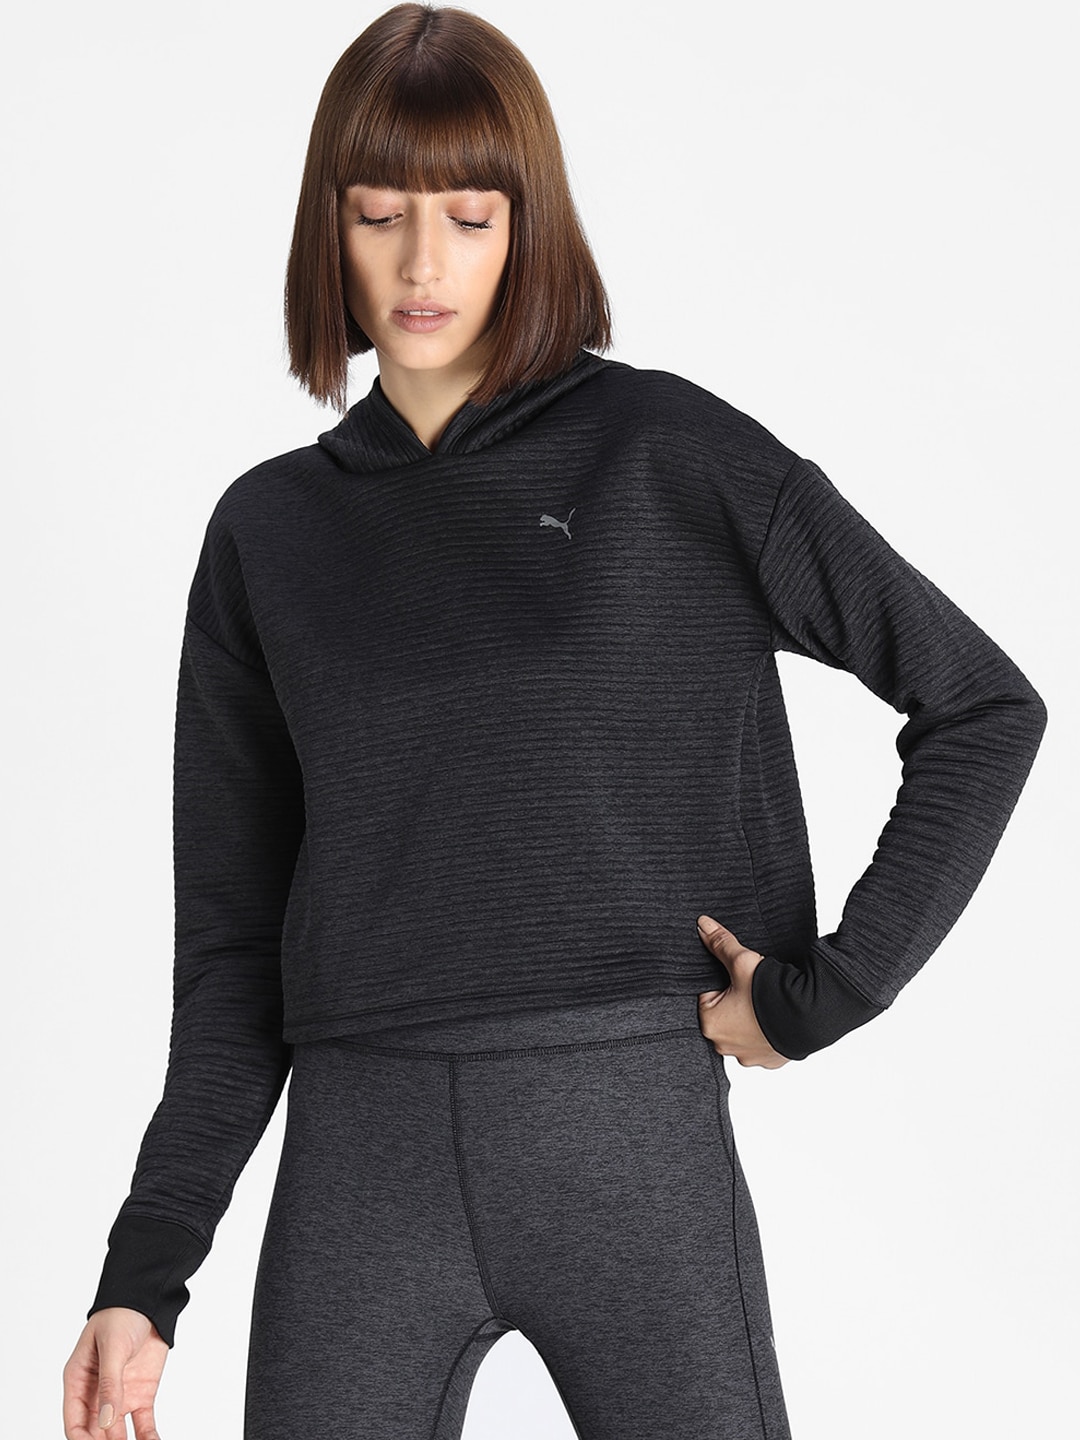 Puma Women Black Striped Hooded Yoga Sweatshirt Price in India